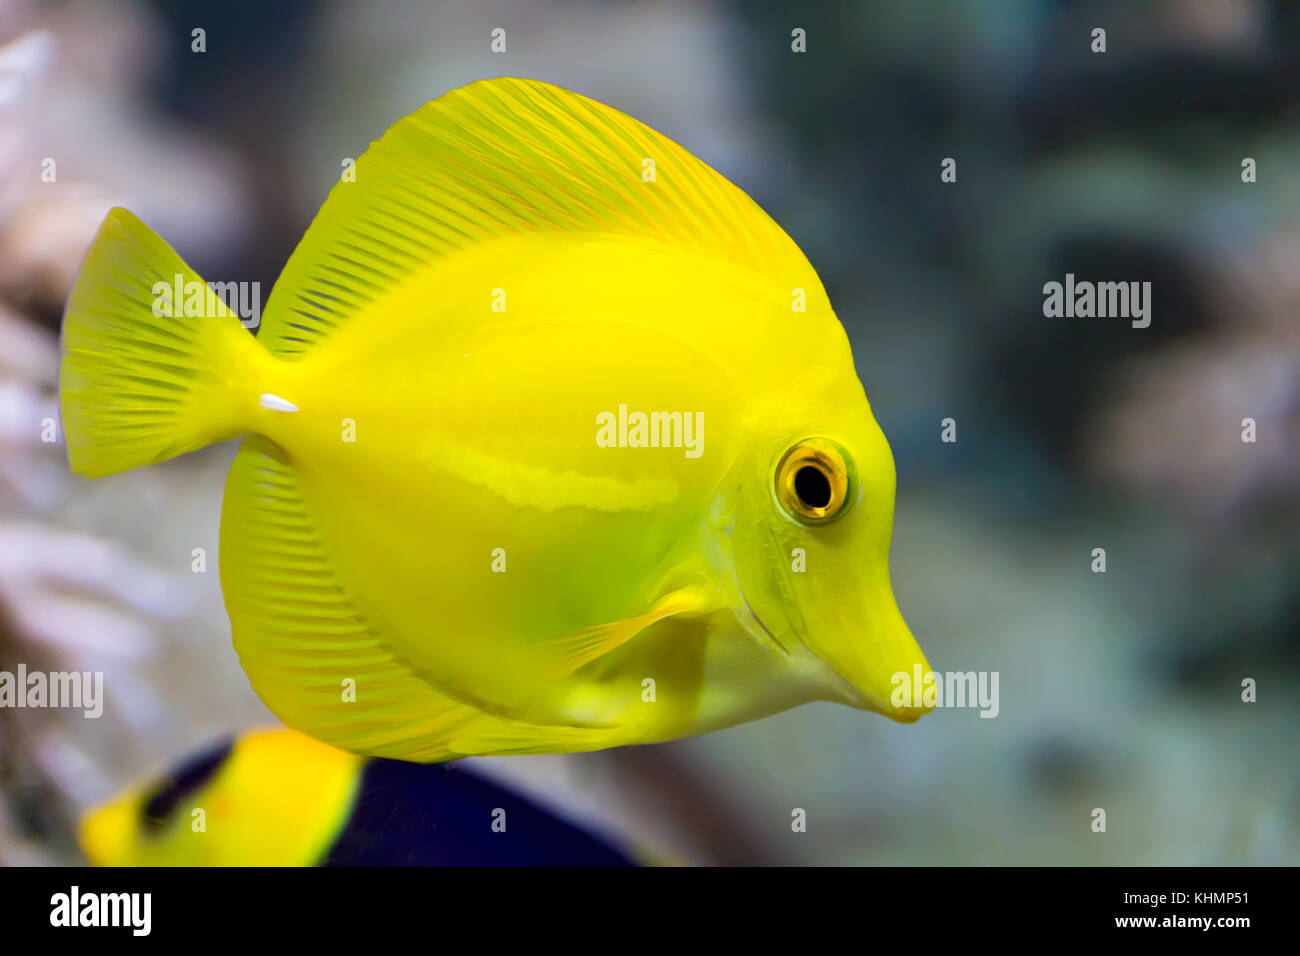 Image of zebrasoma yellow tang fish in aquarium Stock Photo